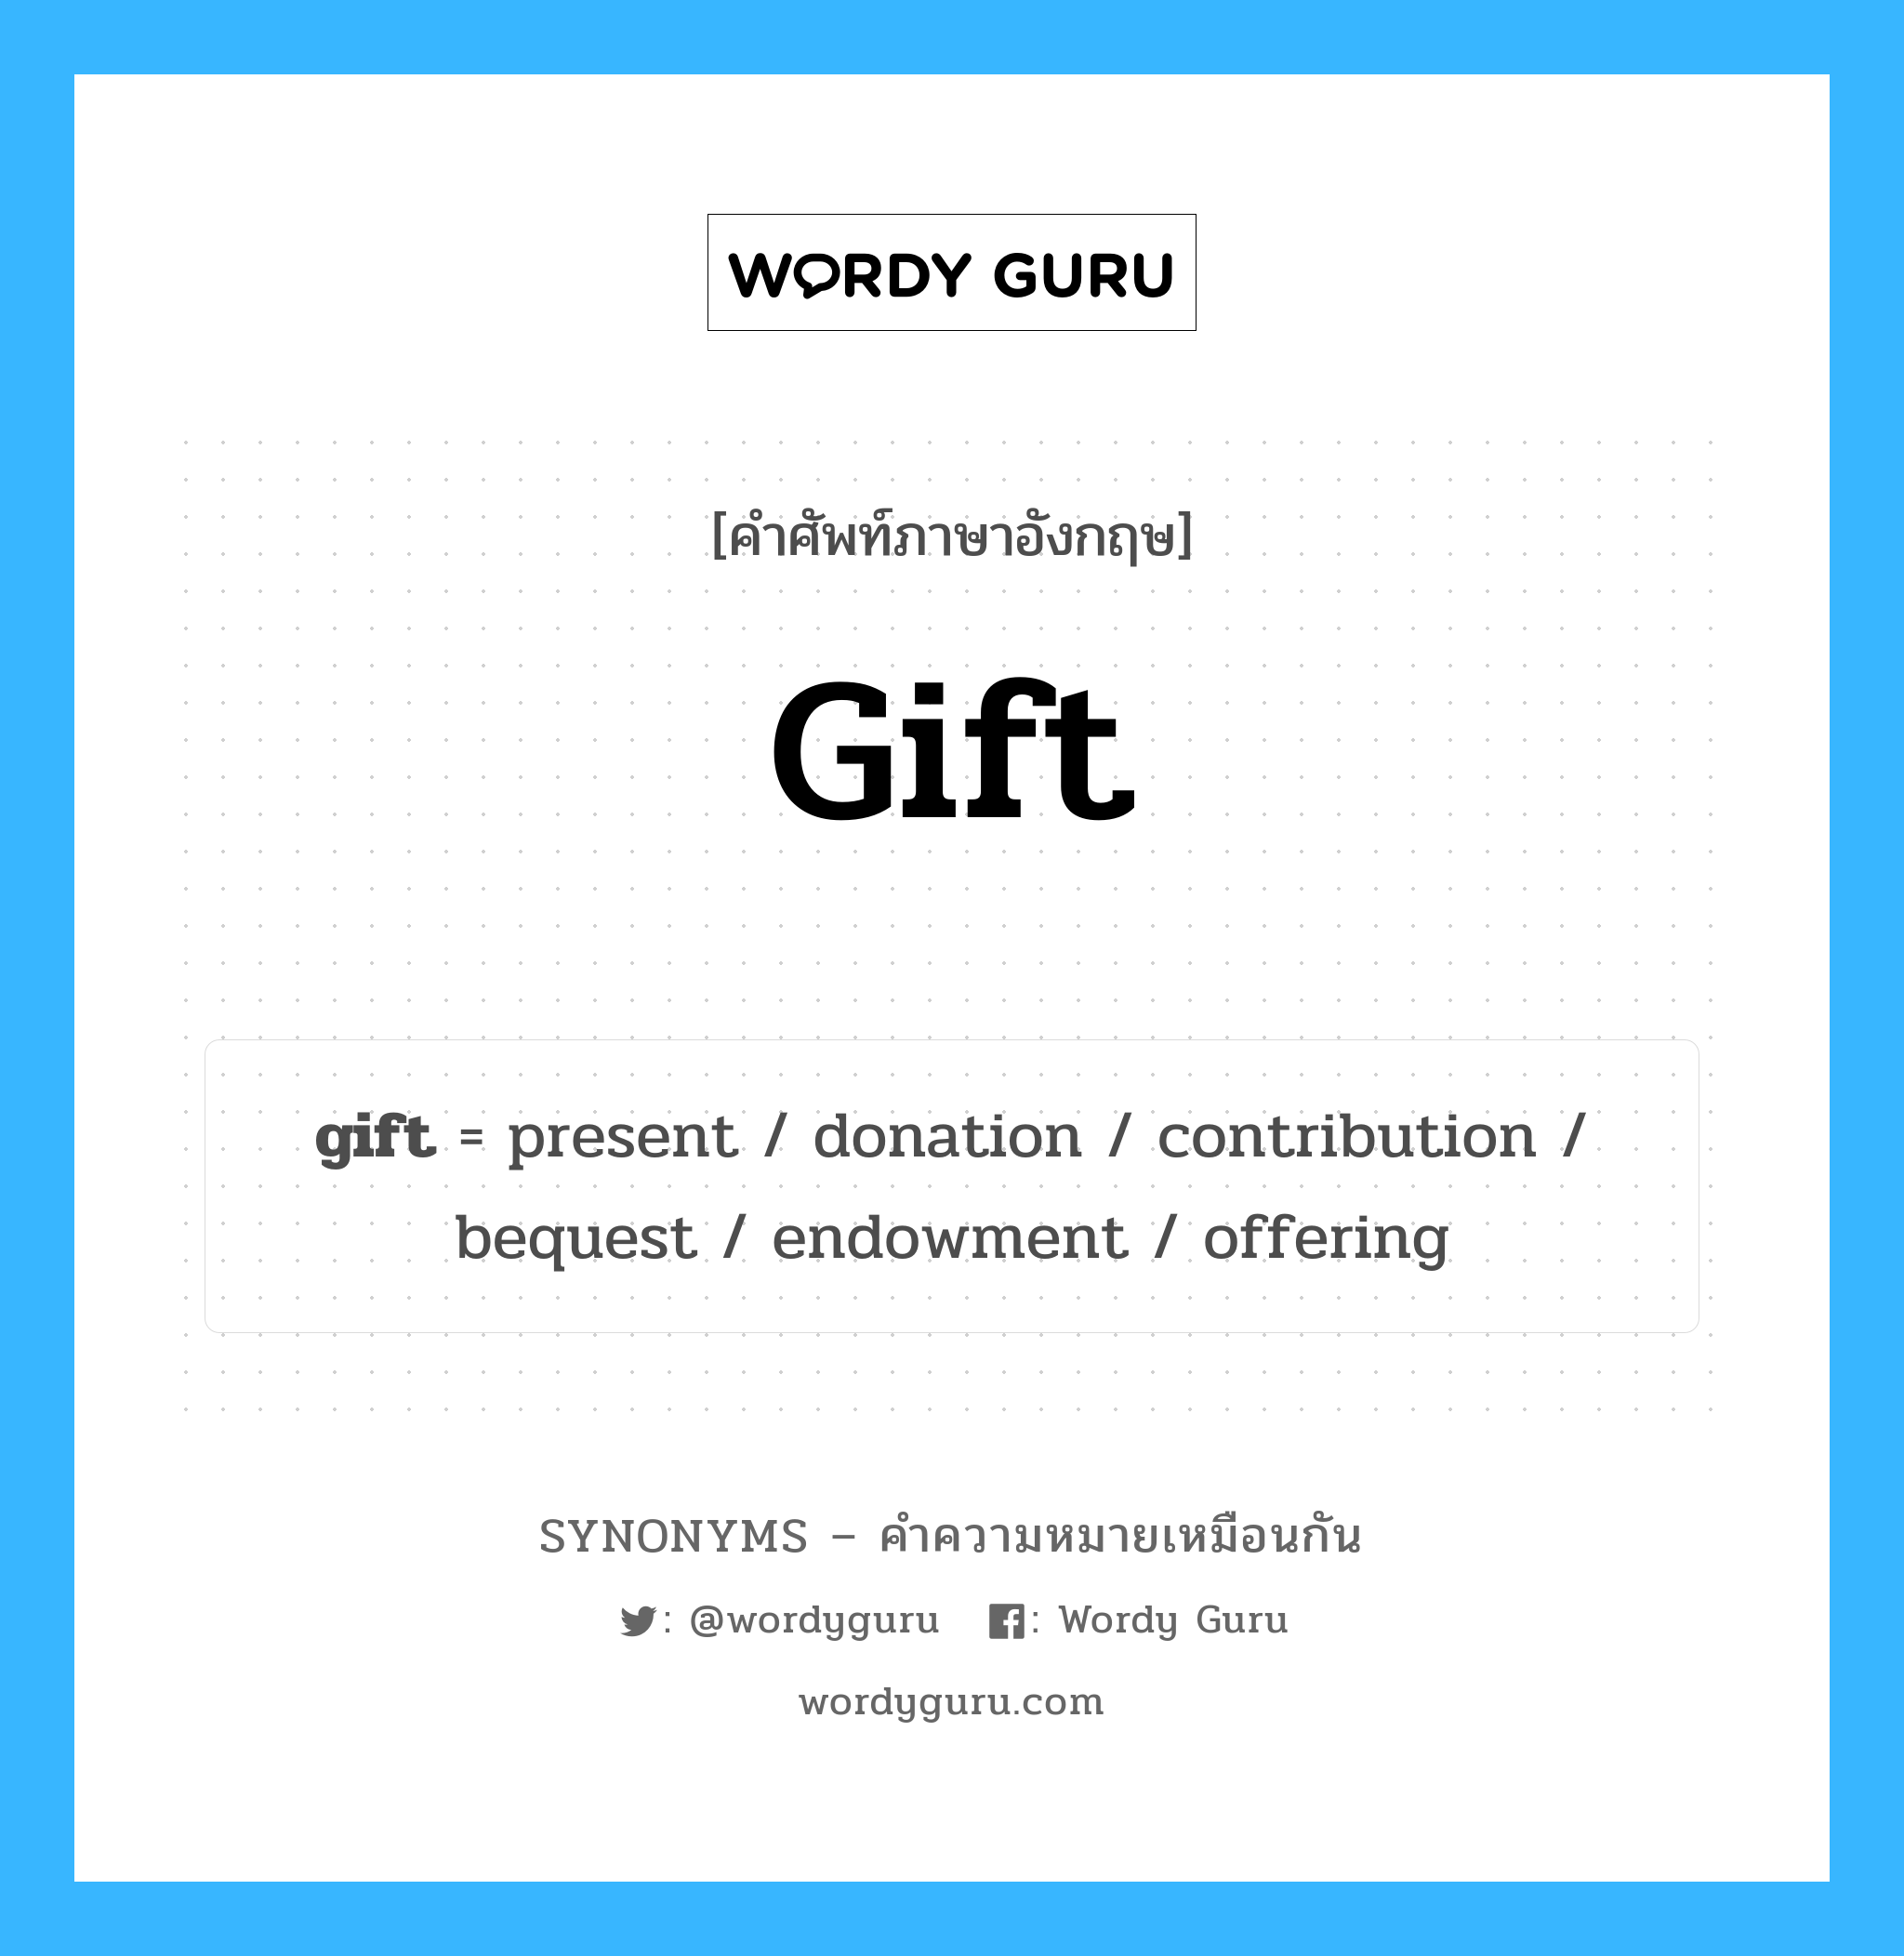 present เป็นหนึ่งใน gift และมีคำอื่น ๆ อีกดังนี้, คำศัพท์ภาษาอังกฤษ present ความหมายคล้ายกันกับ gift แปลว่า ปัจจุบัน หมวด gift